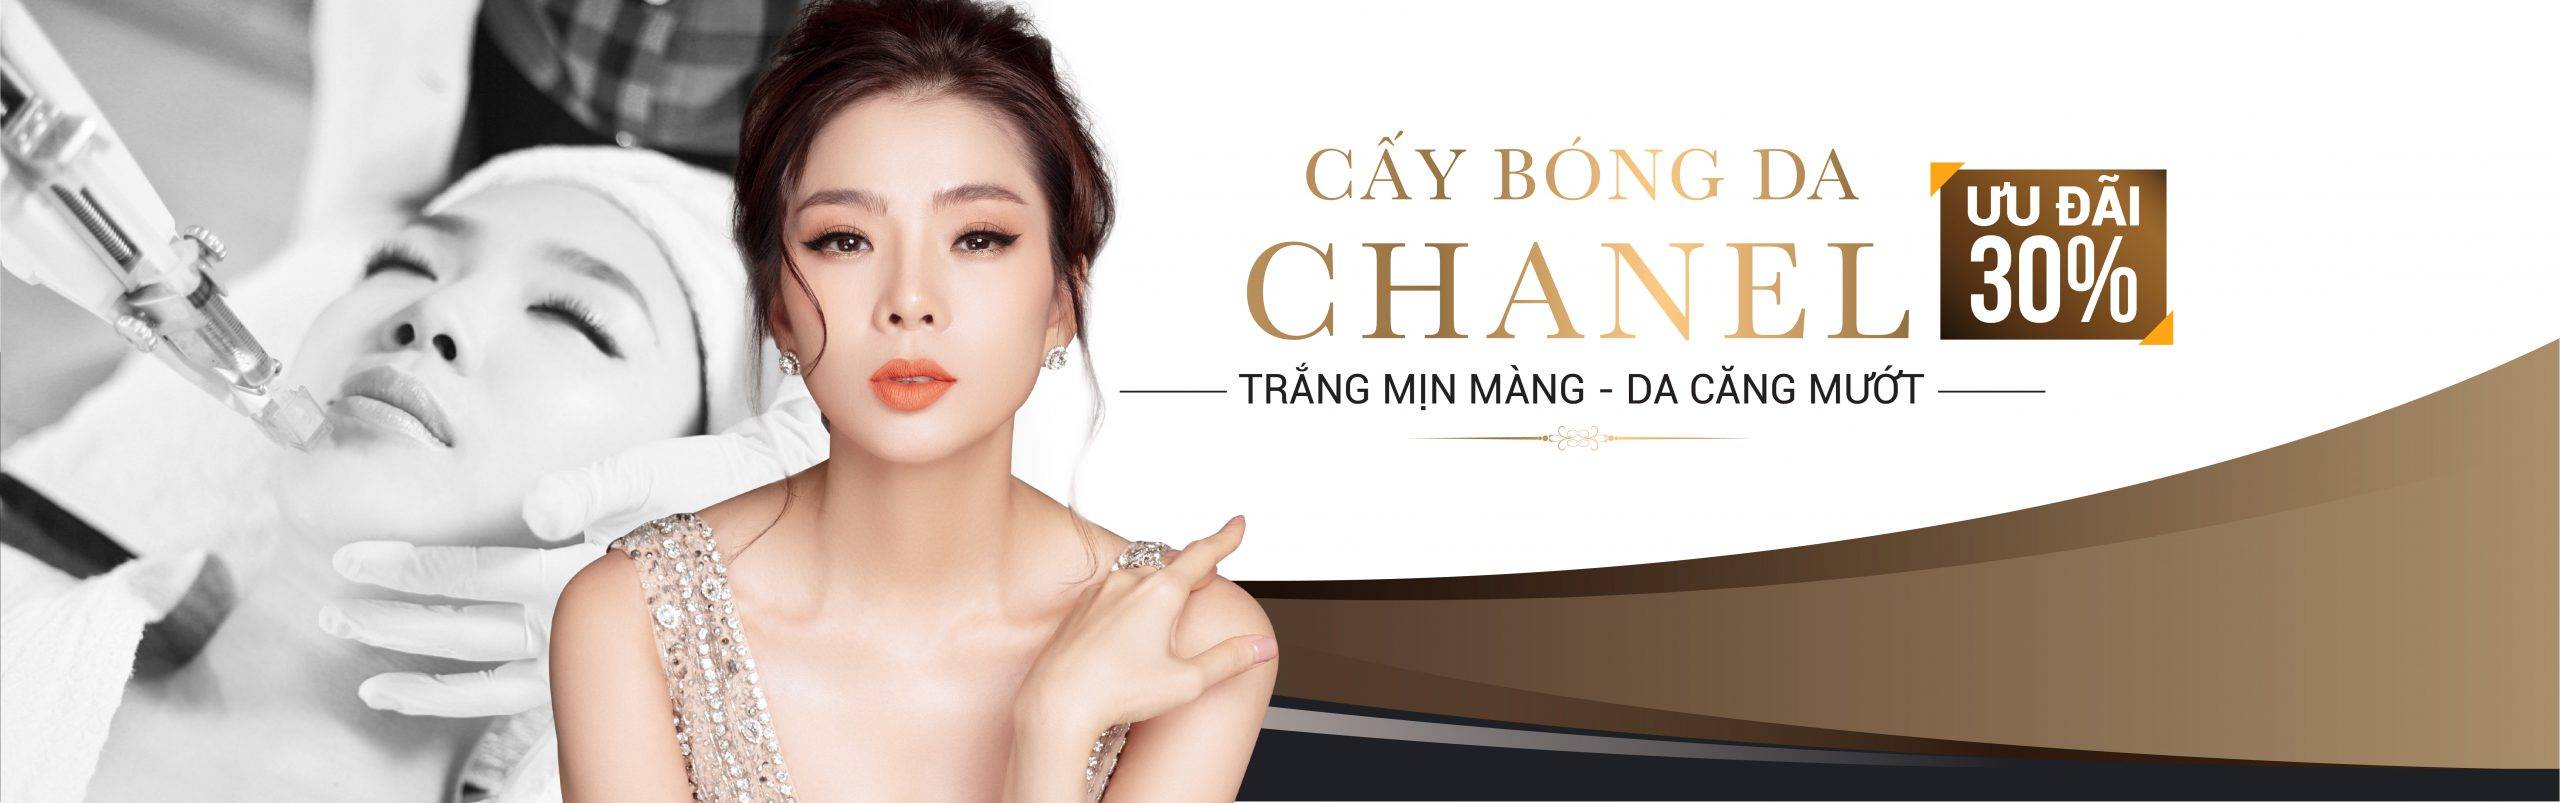 cay-cang-bong-da-chanel-banner